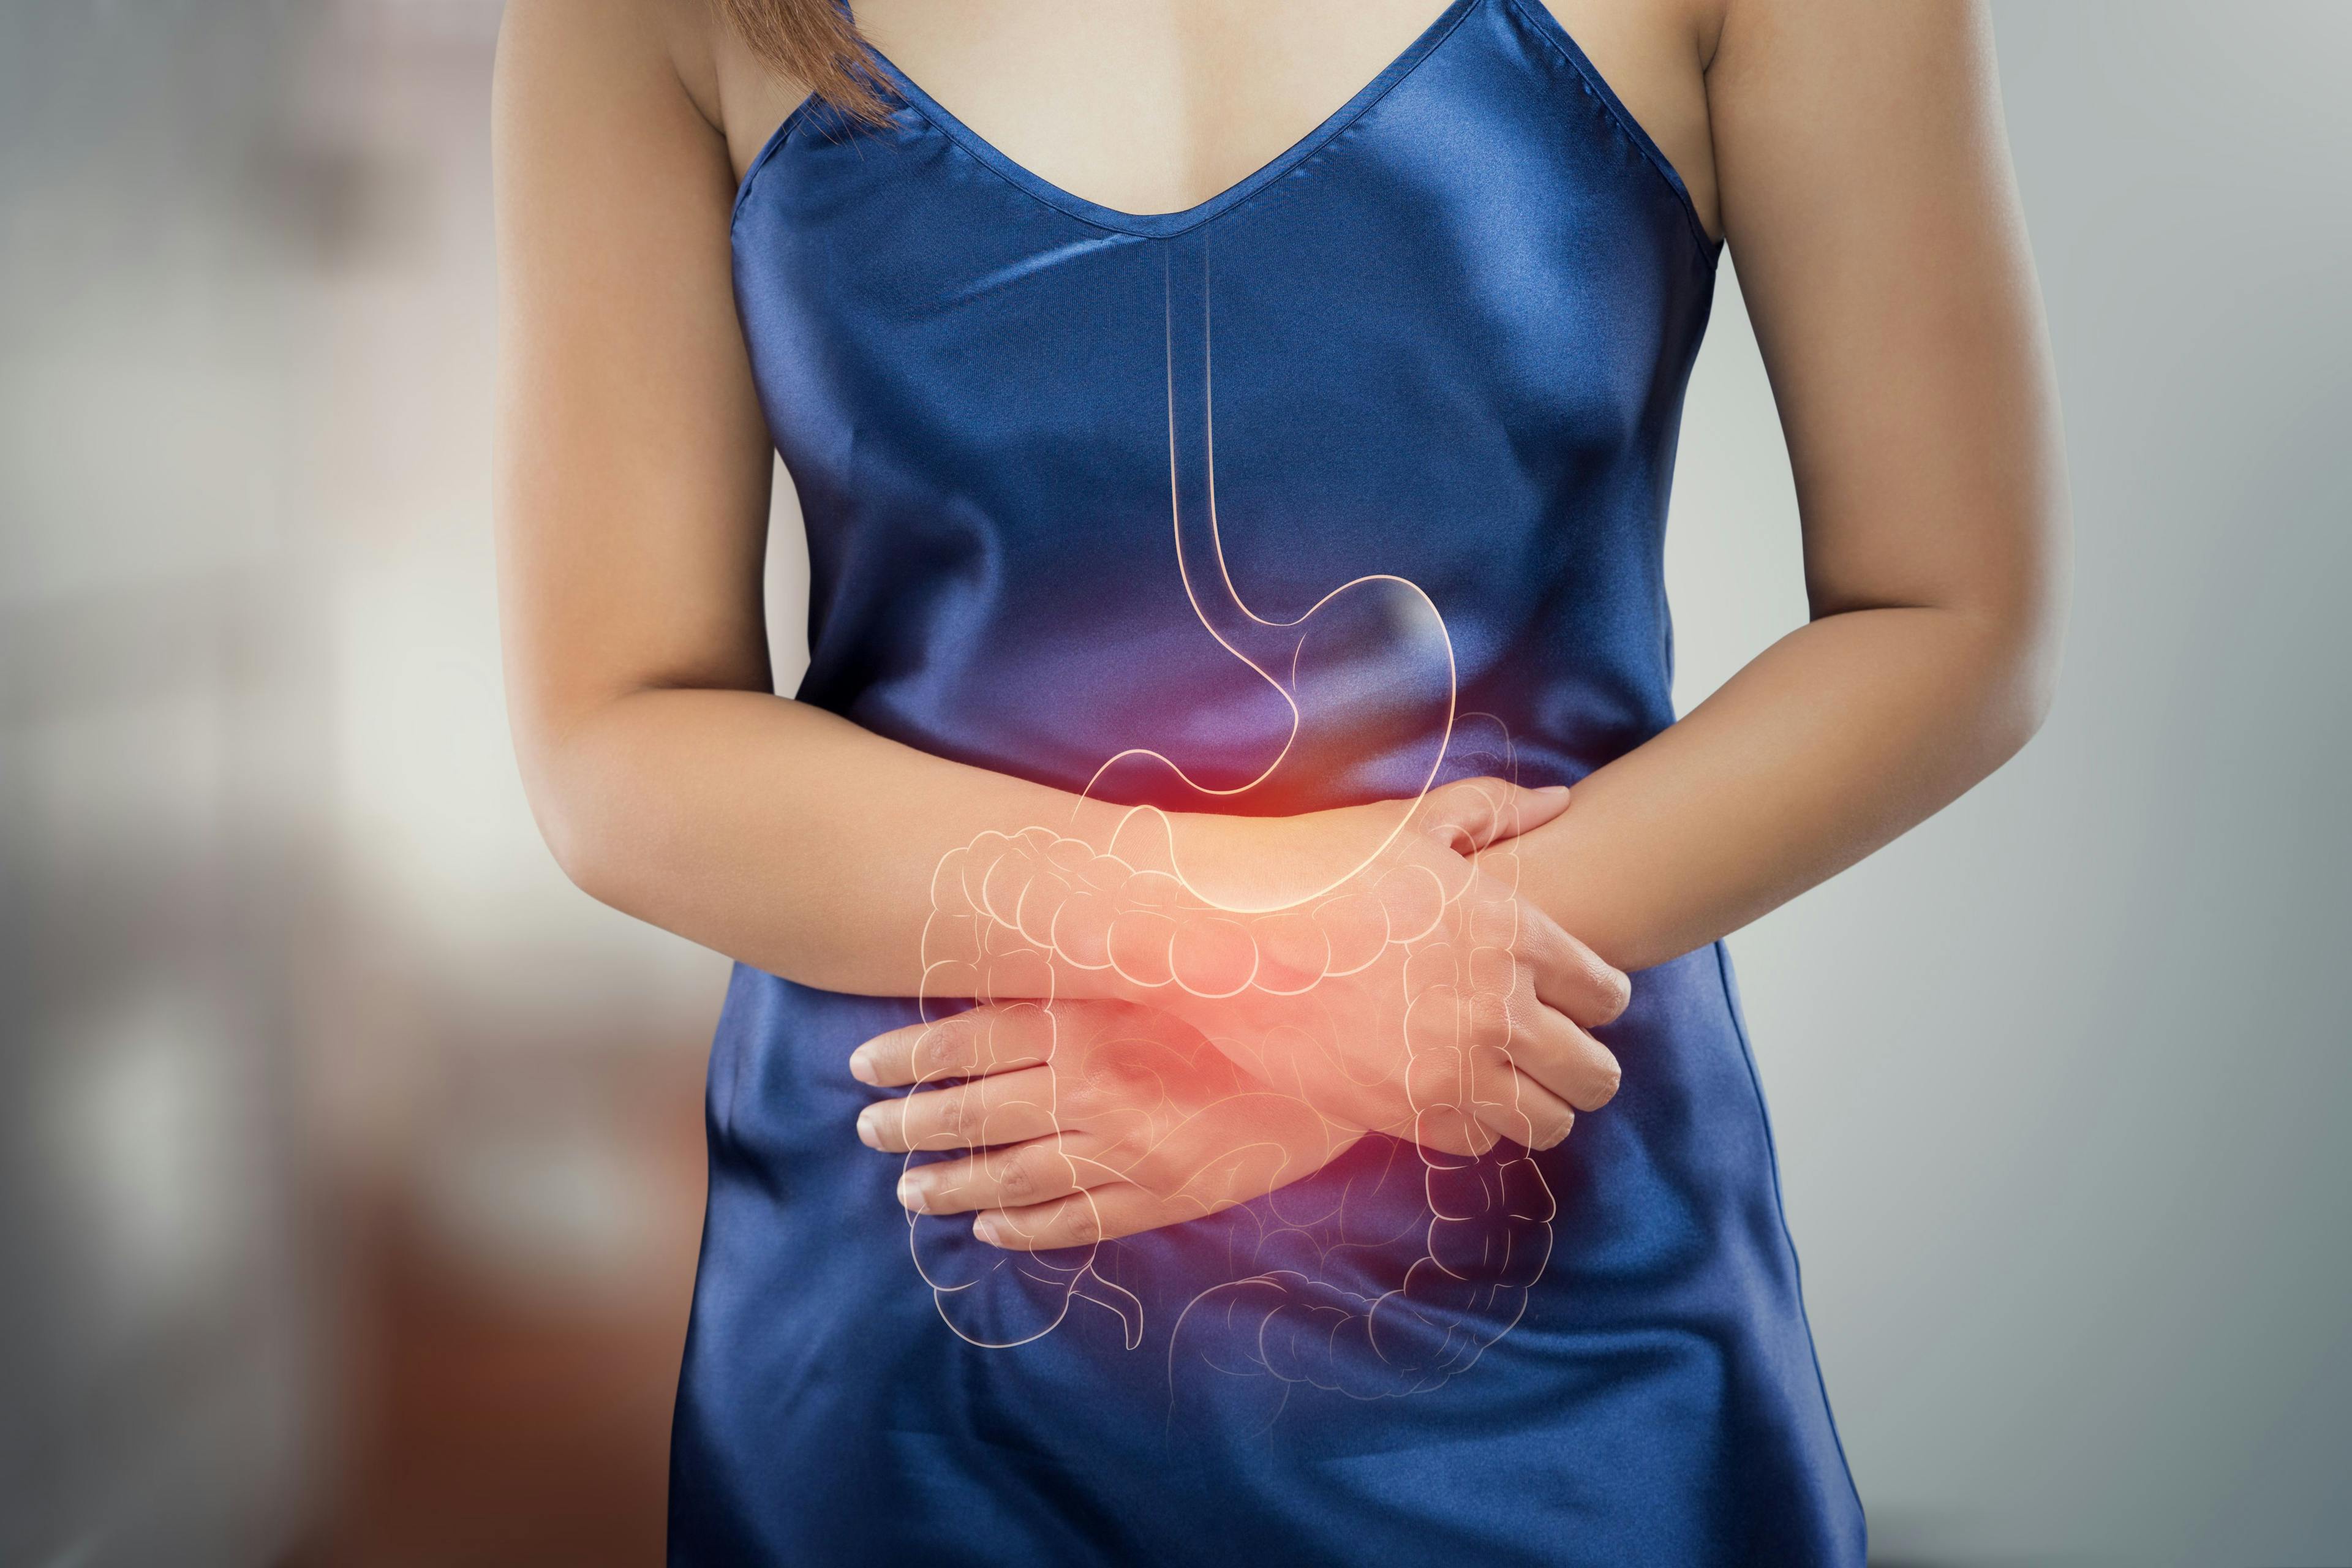 woman digestive issues | Image Credit: eddows - stock.adobe.com